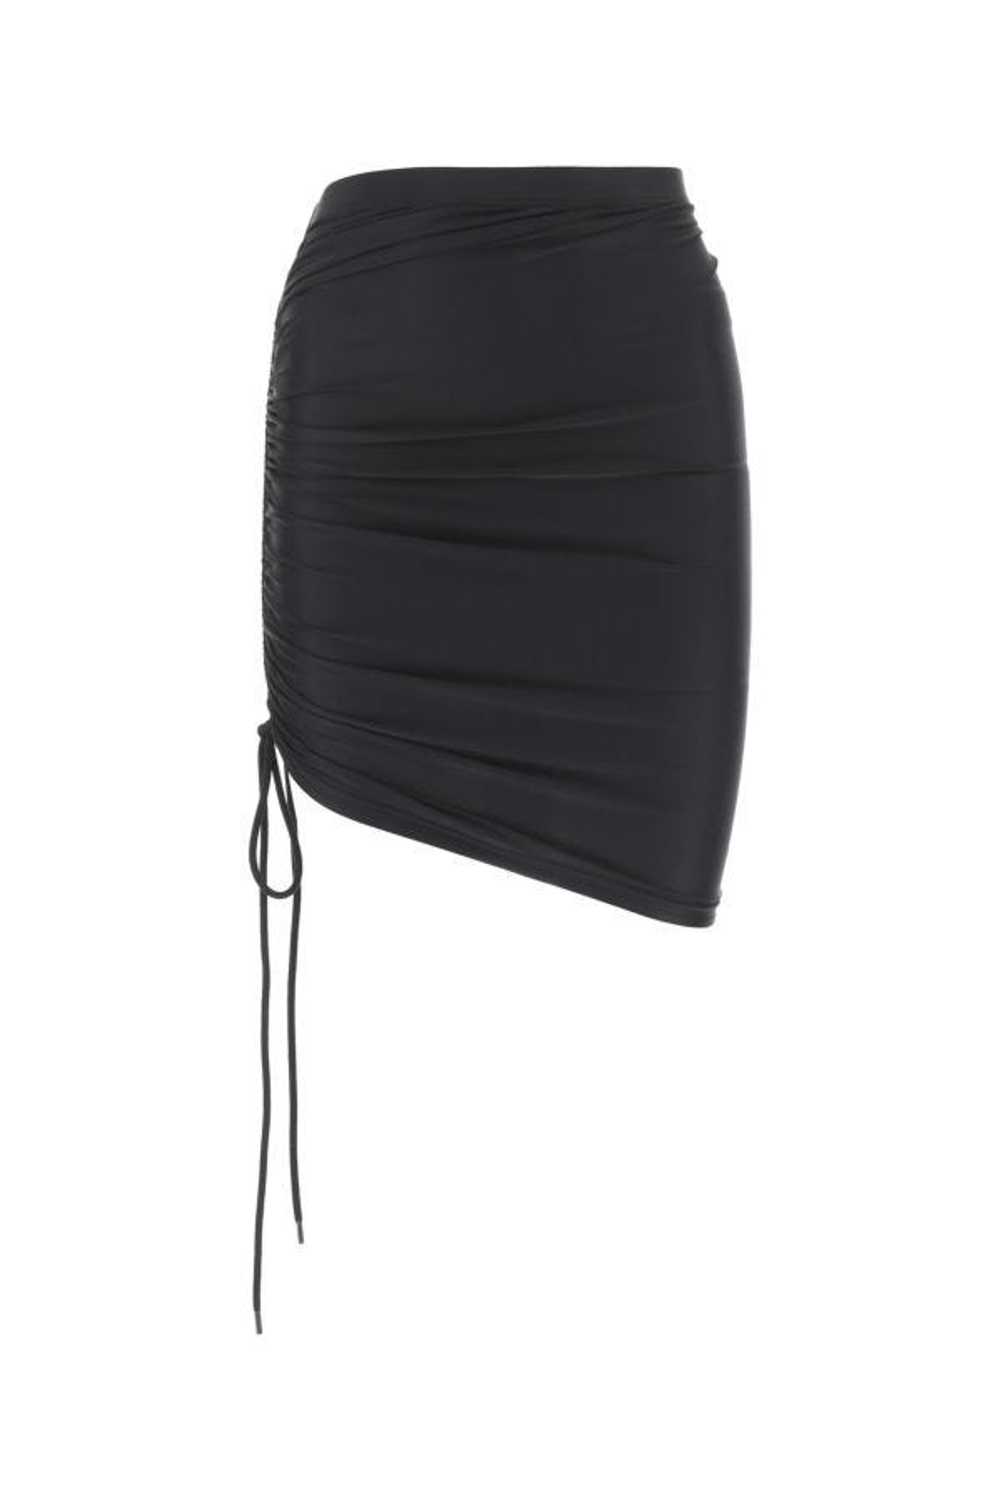 Balenciaga Woman Black Stretch Nylon Skirt - image 1